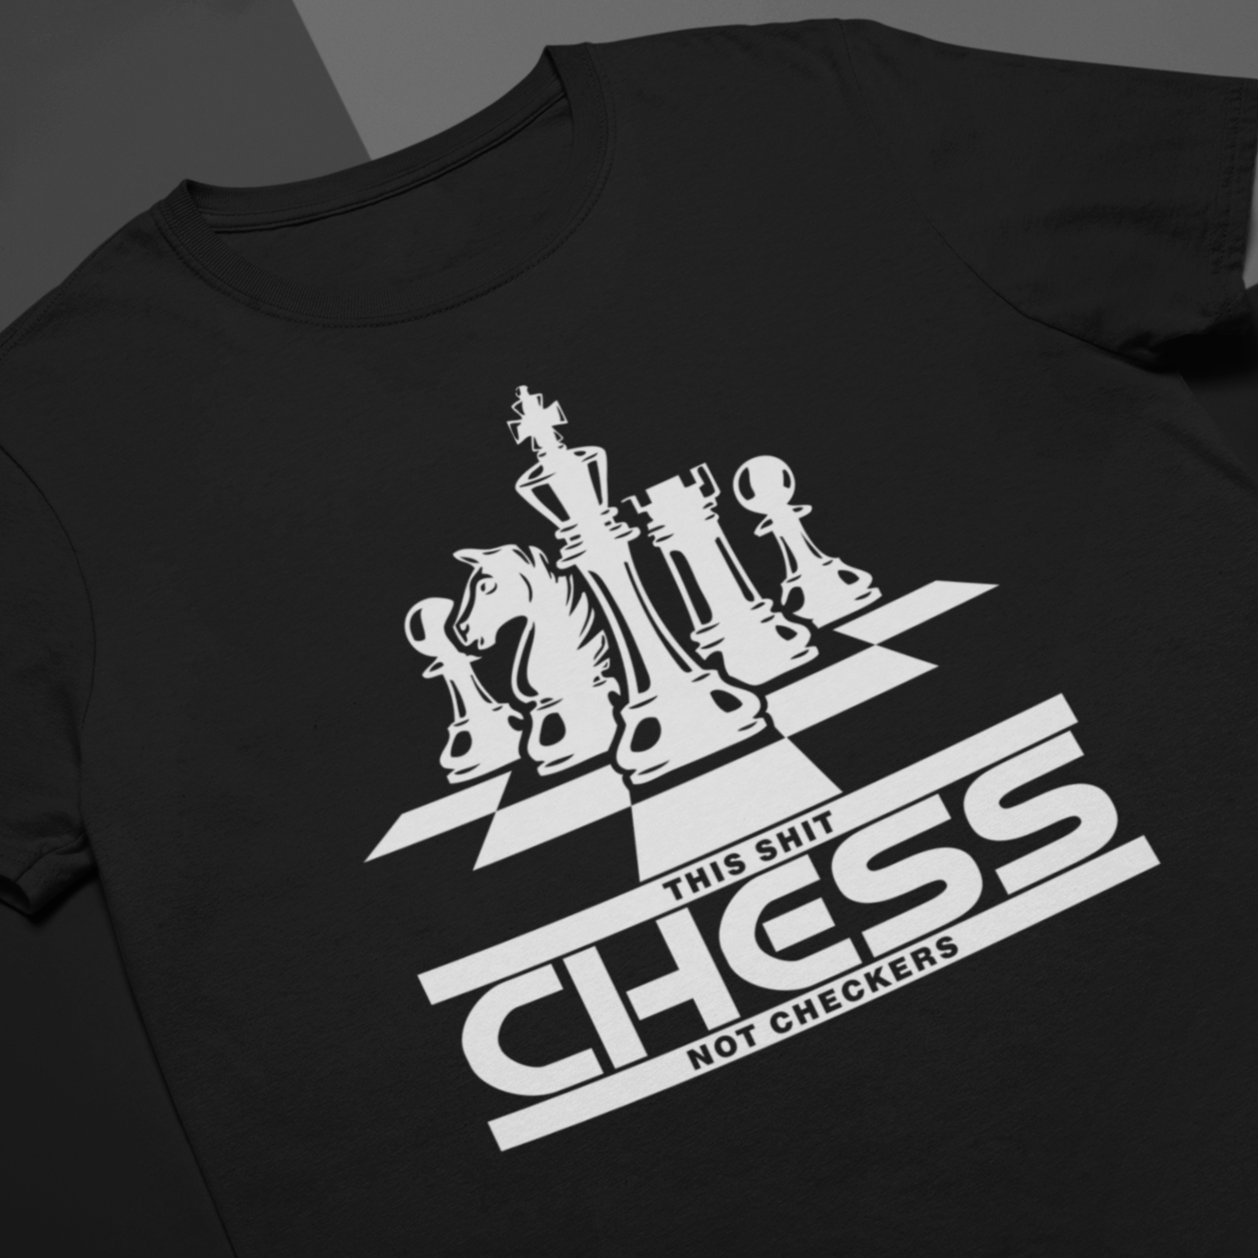 Dark anime fans - Chess Club 